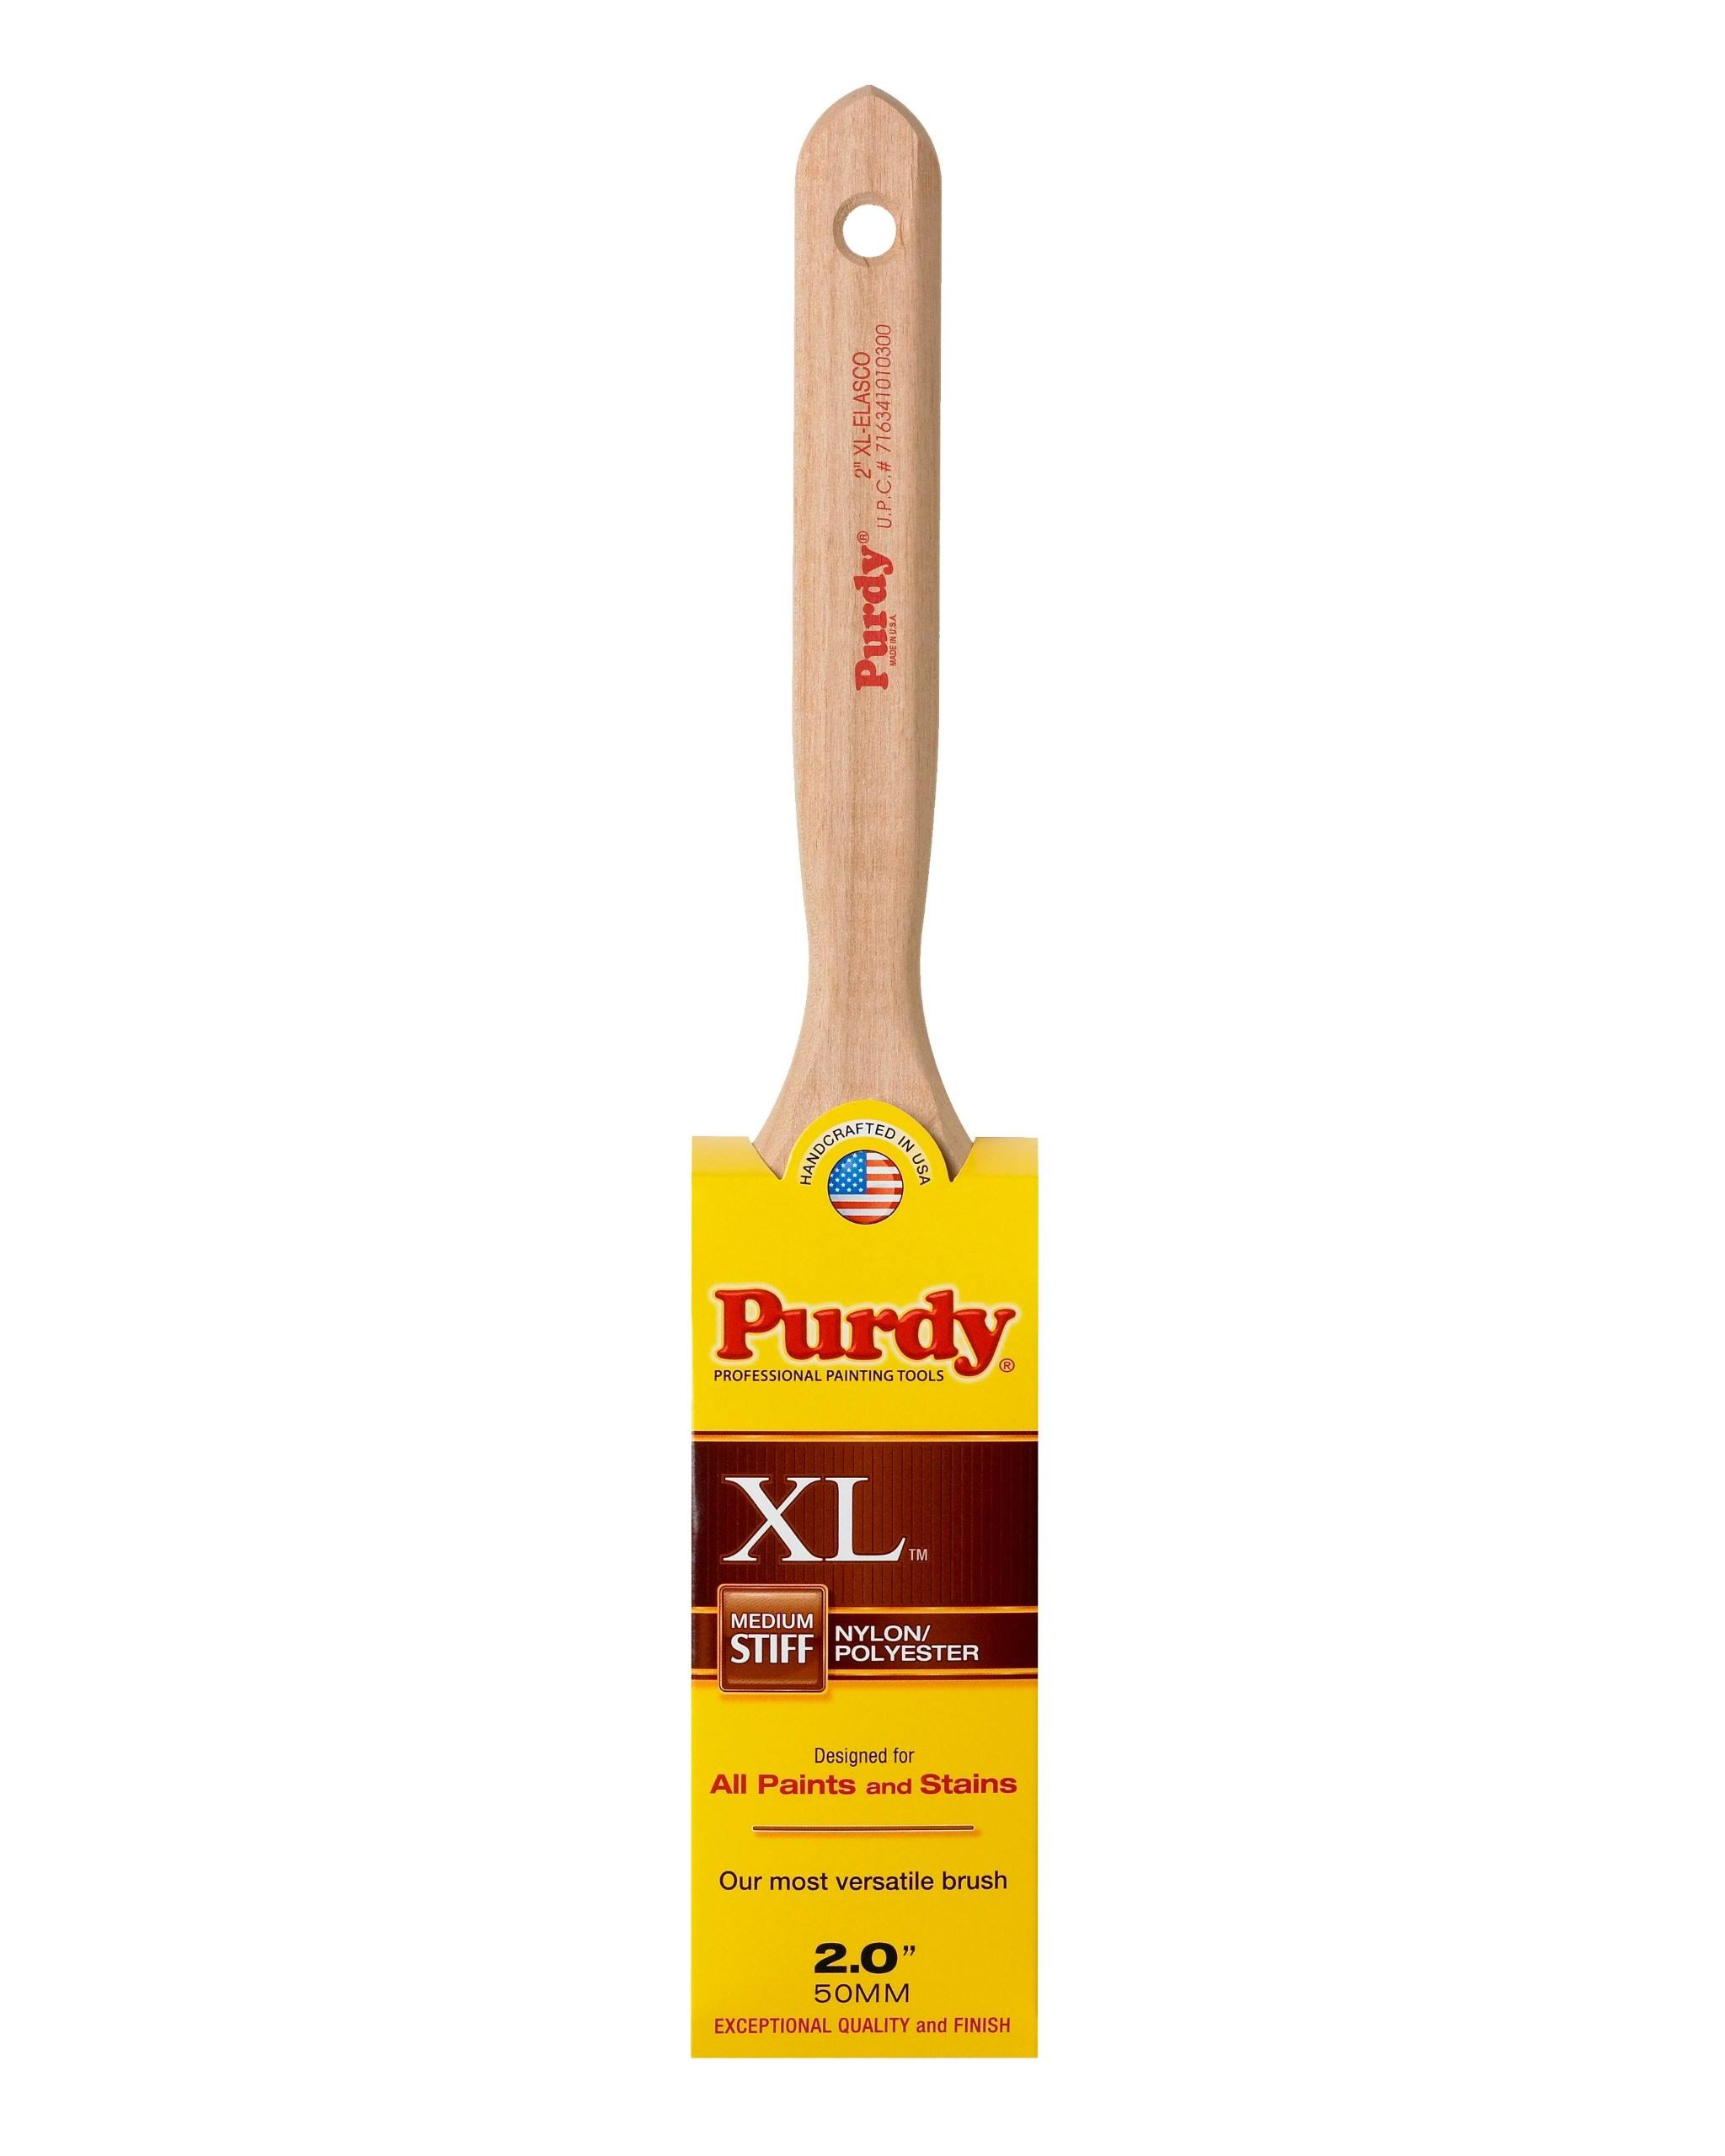 Purdy Xl Elasco Flat Sash Brush - 2"